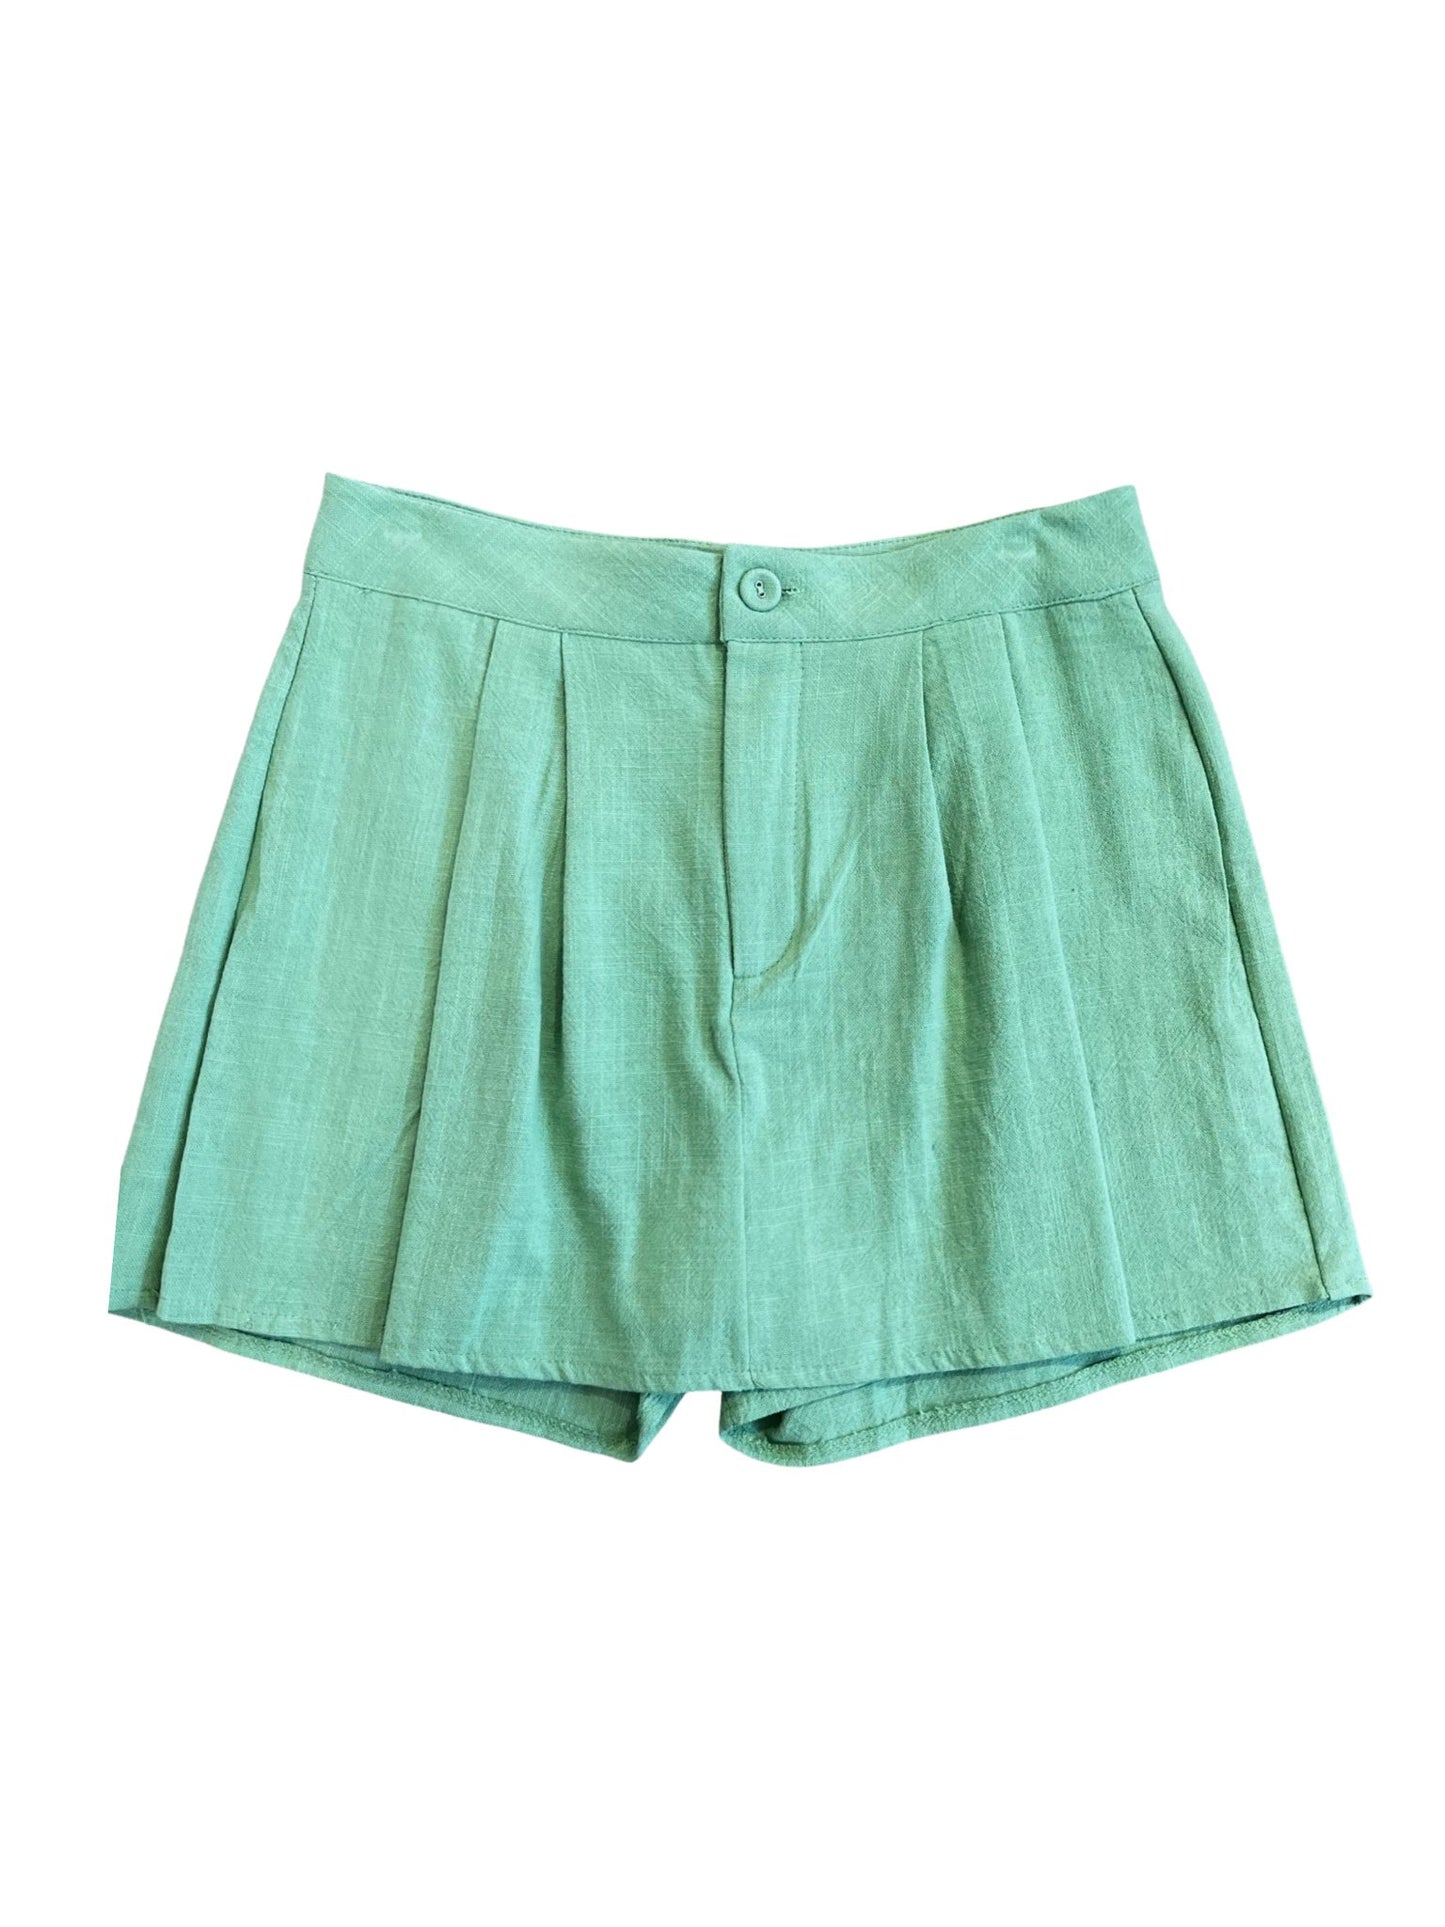 100% Organic Fabric Skort - Green - Bottom - LussoCA